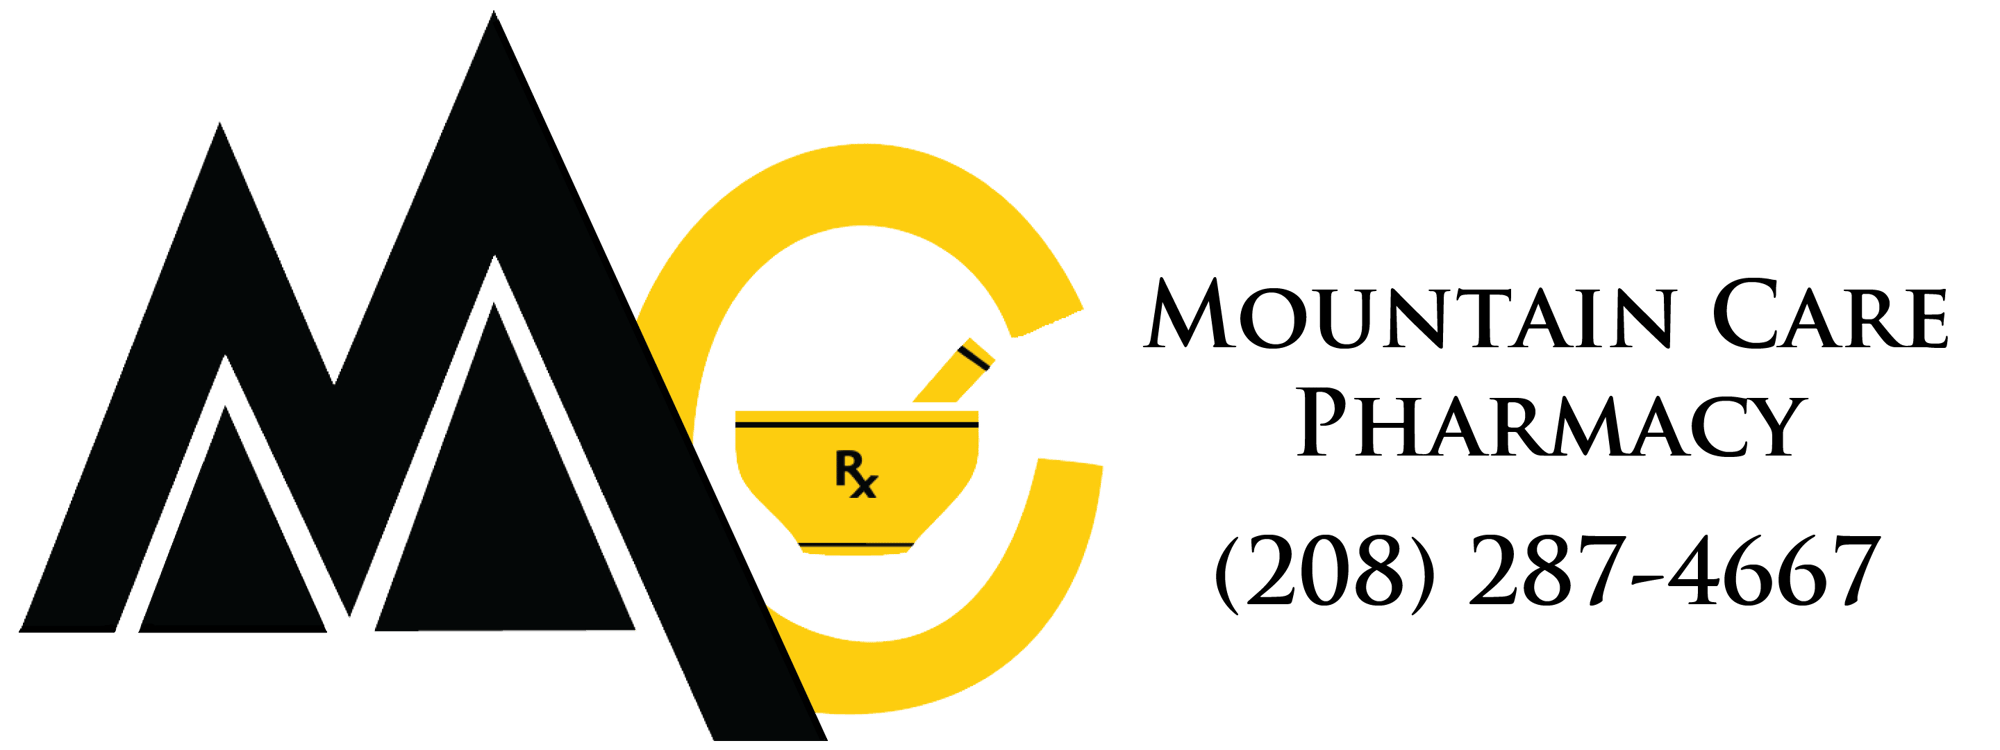 Mountain Care Pharmacy